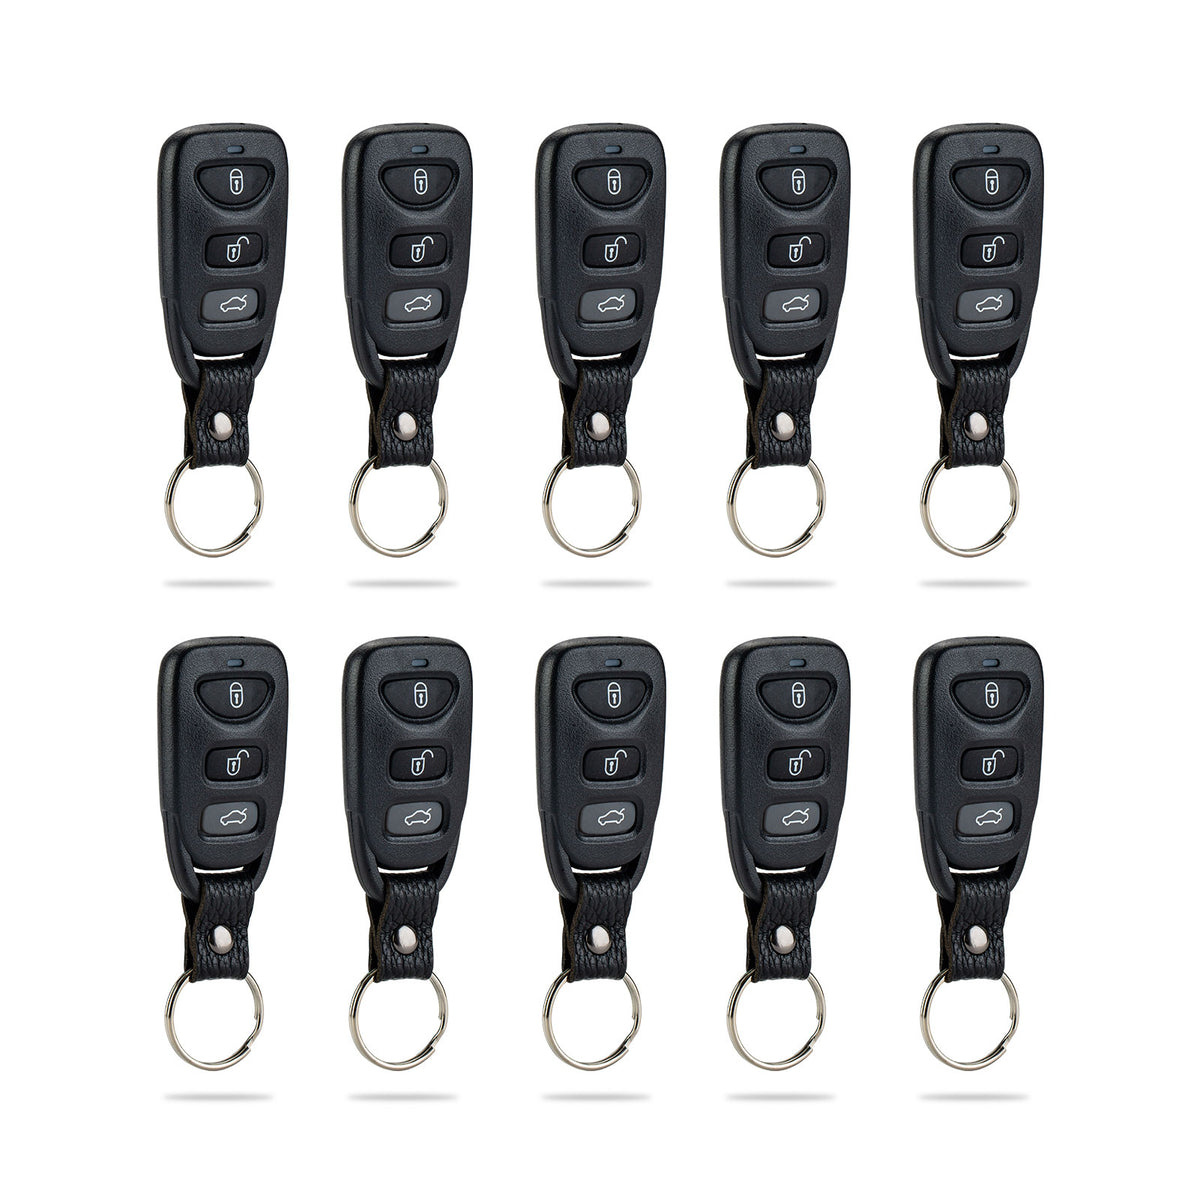 Lots of 10 Remote Car Key Fob Replacement for Hyundai 2007 2008 2009 2010 Sonata Elantra OSLOKA-310T